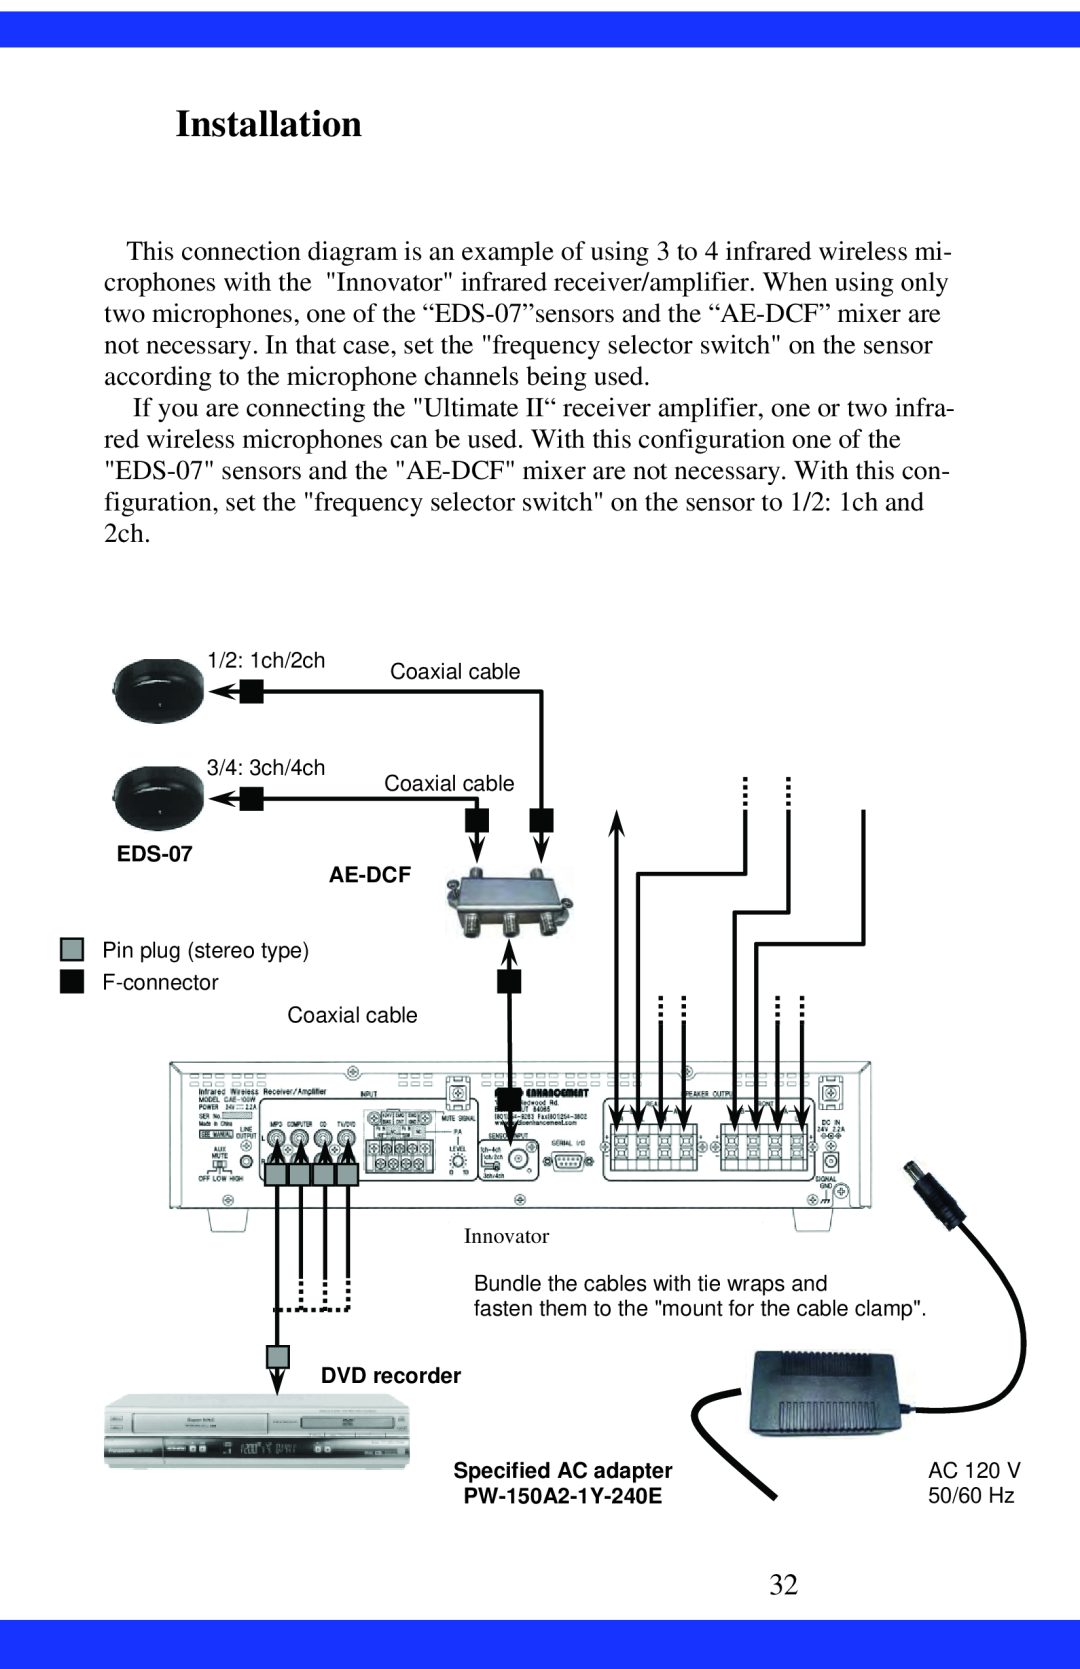 Dukane CAE-20W instruction manual Installation, EDS-07, Ae-Dcf, DVD recorder, 50/60 Hz 